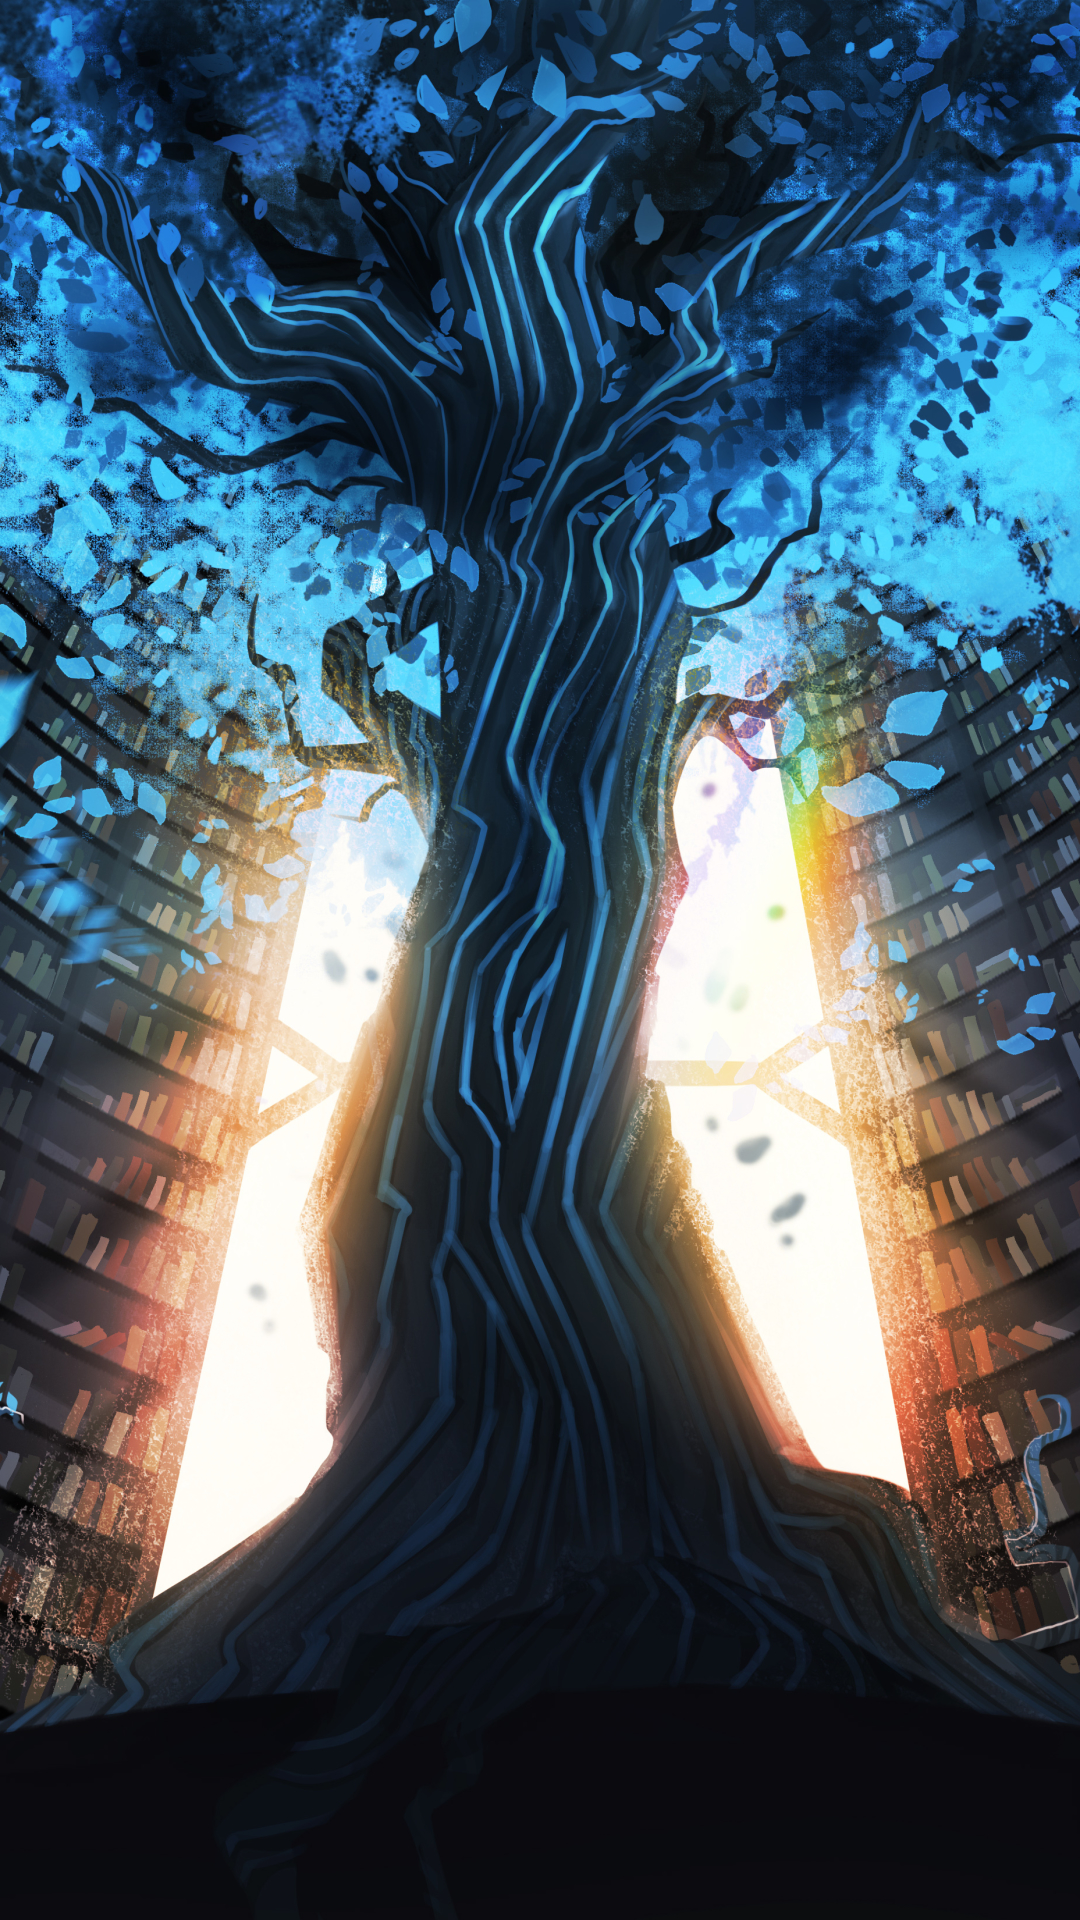 Artistic Tree Phone Wallpaper by Alex Braun